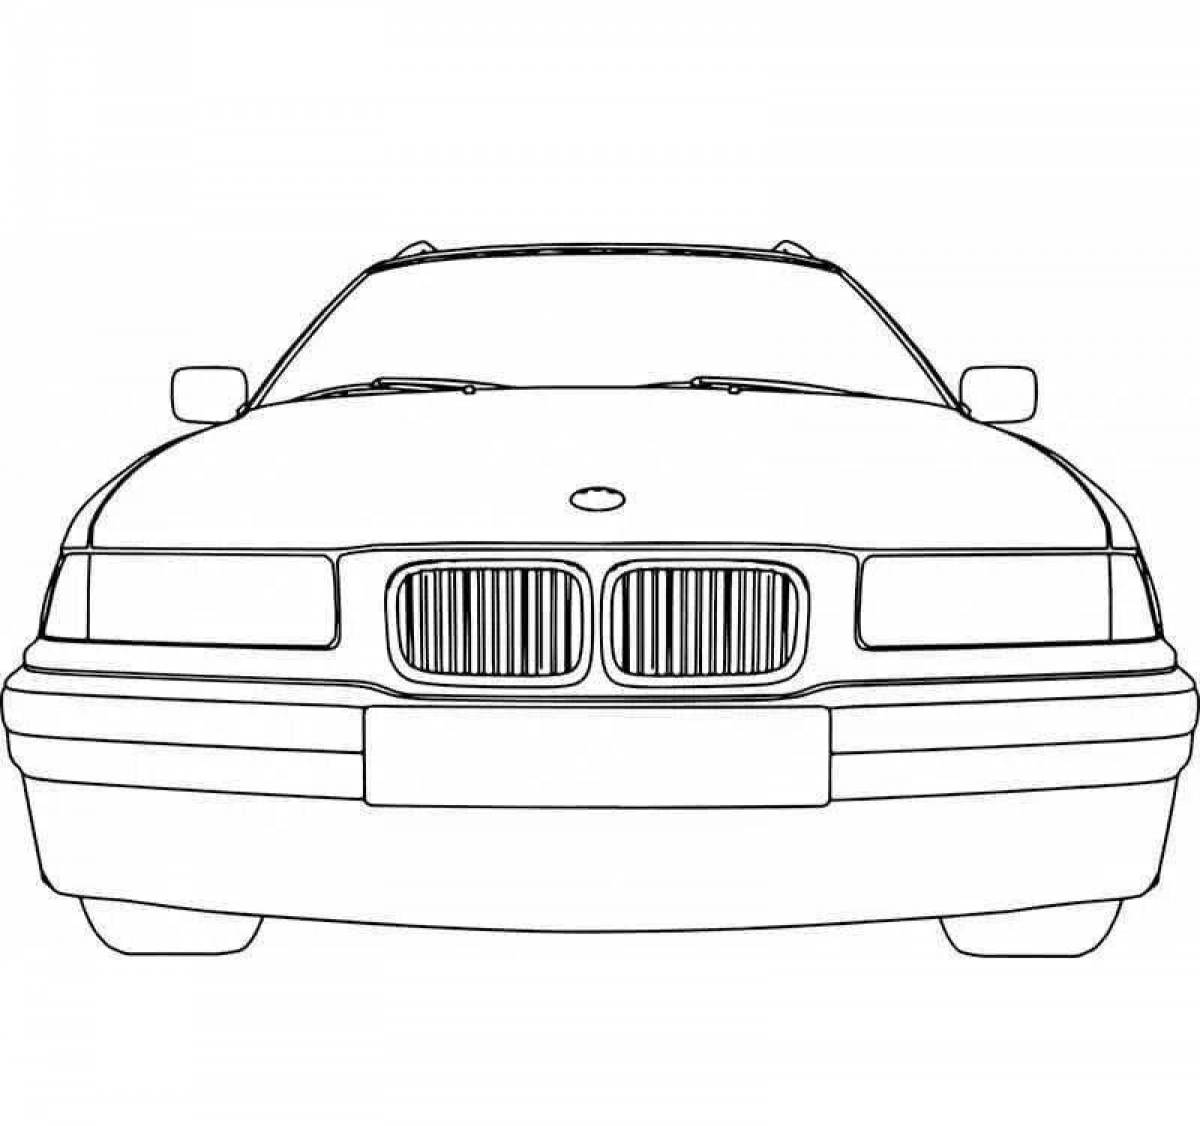 Распечатать м5. Раскраска BMW e53. BMW e38 контур. БМВ е39 контур. Раскраска БМВ е65.